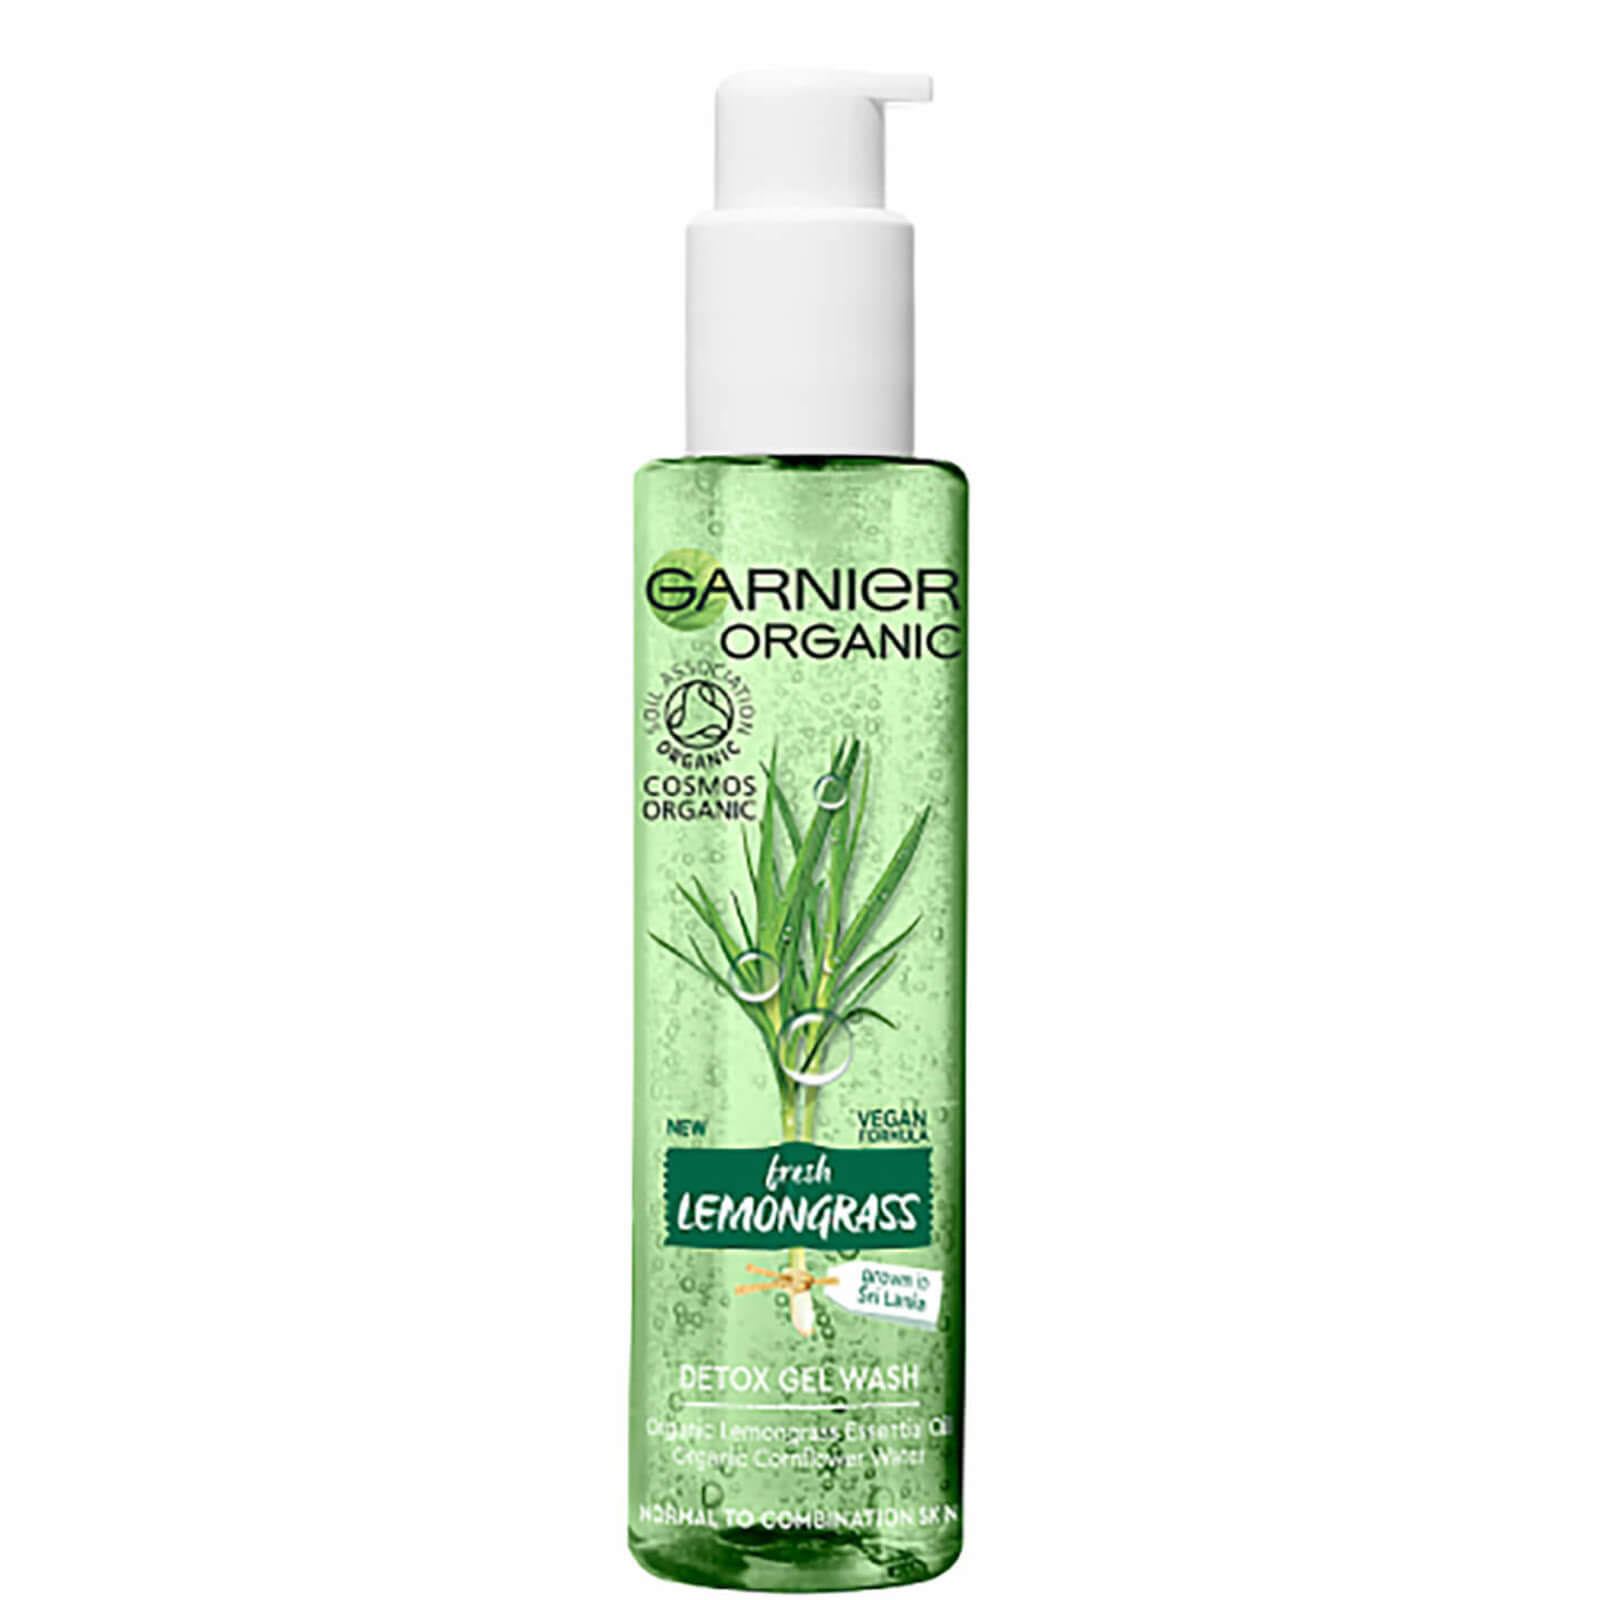 Garnier Organic Lemongrass Gel Wash - 150ml